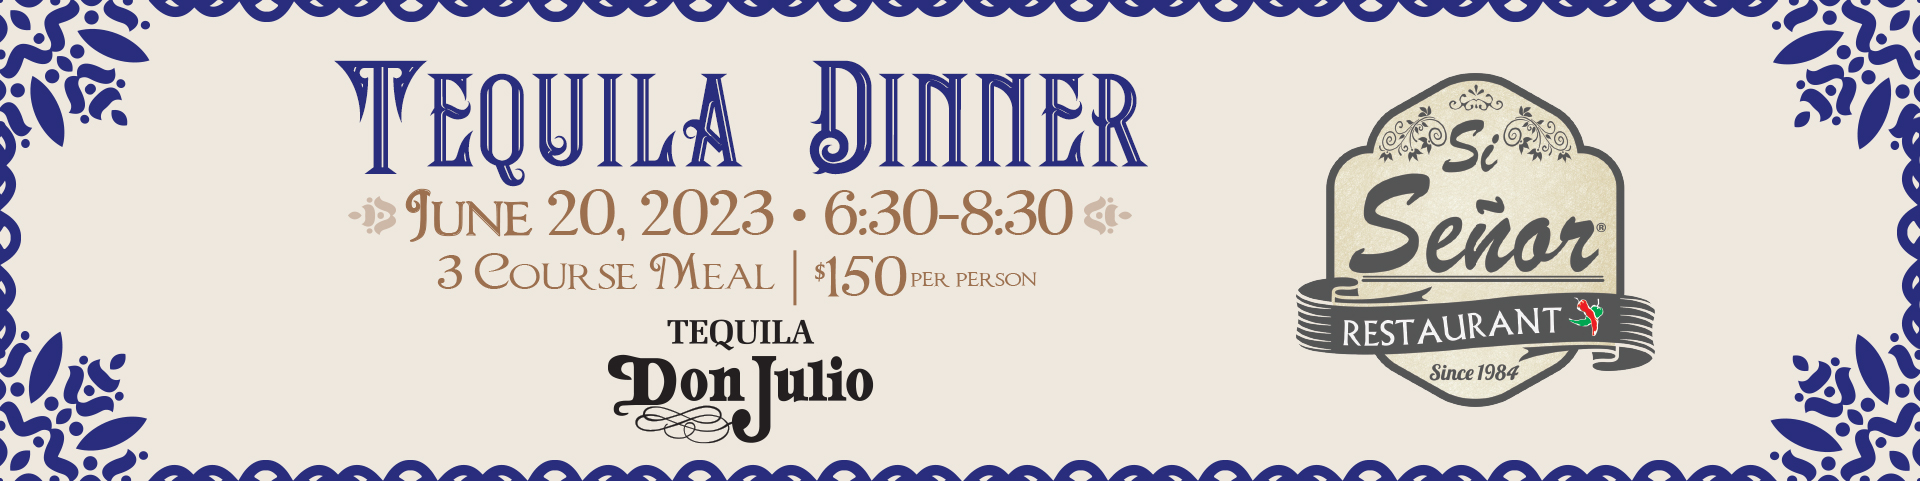 ss-tequila-dinner-banner